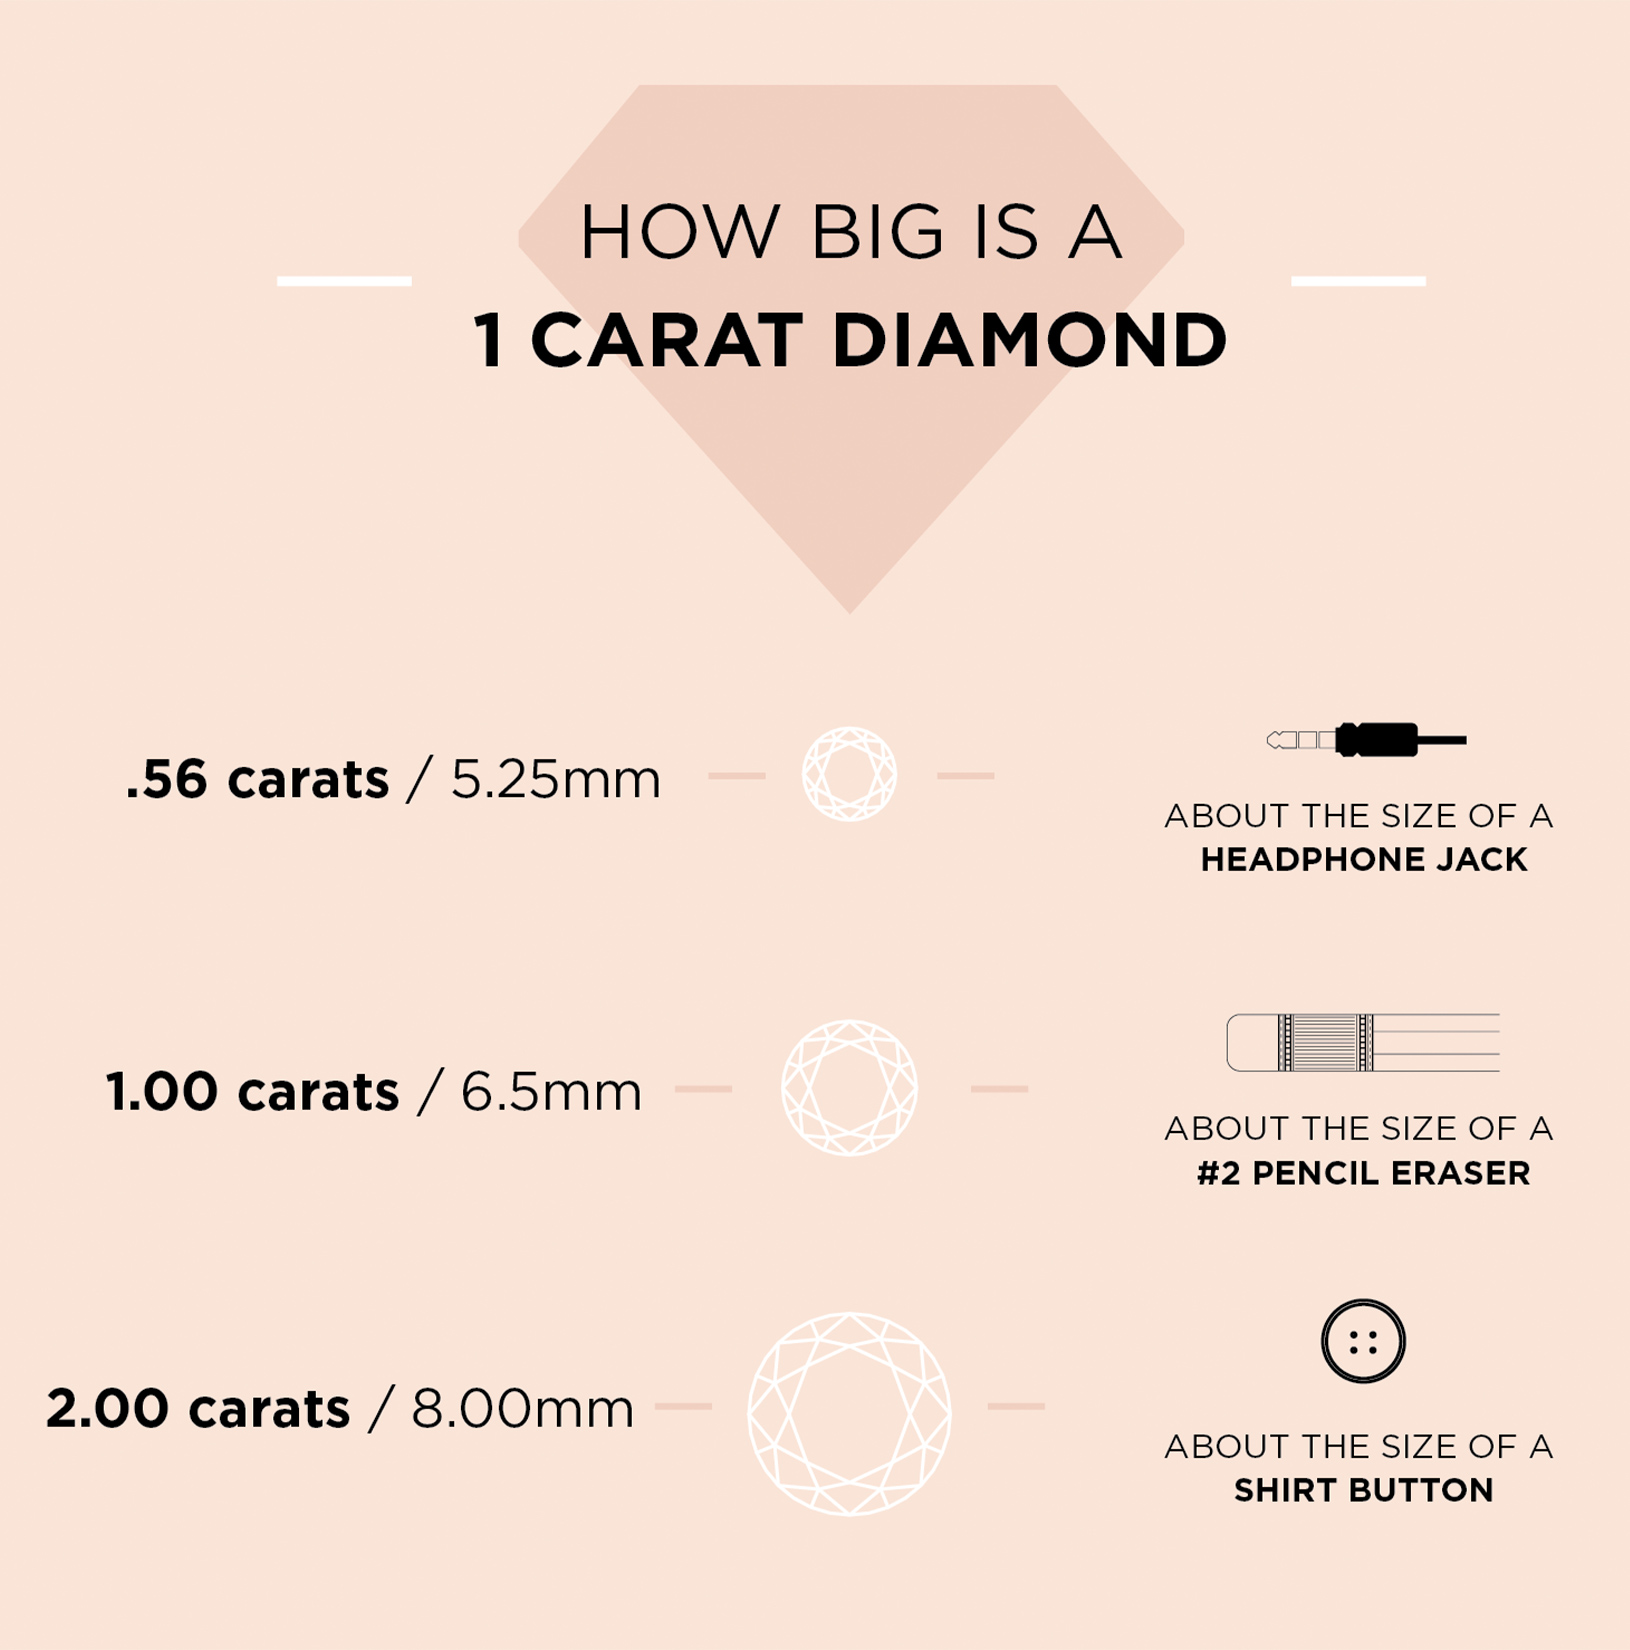 Infographic explaining how big a 1 carat diamond is